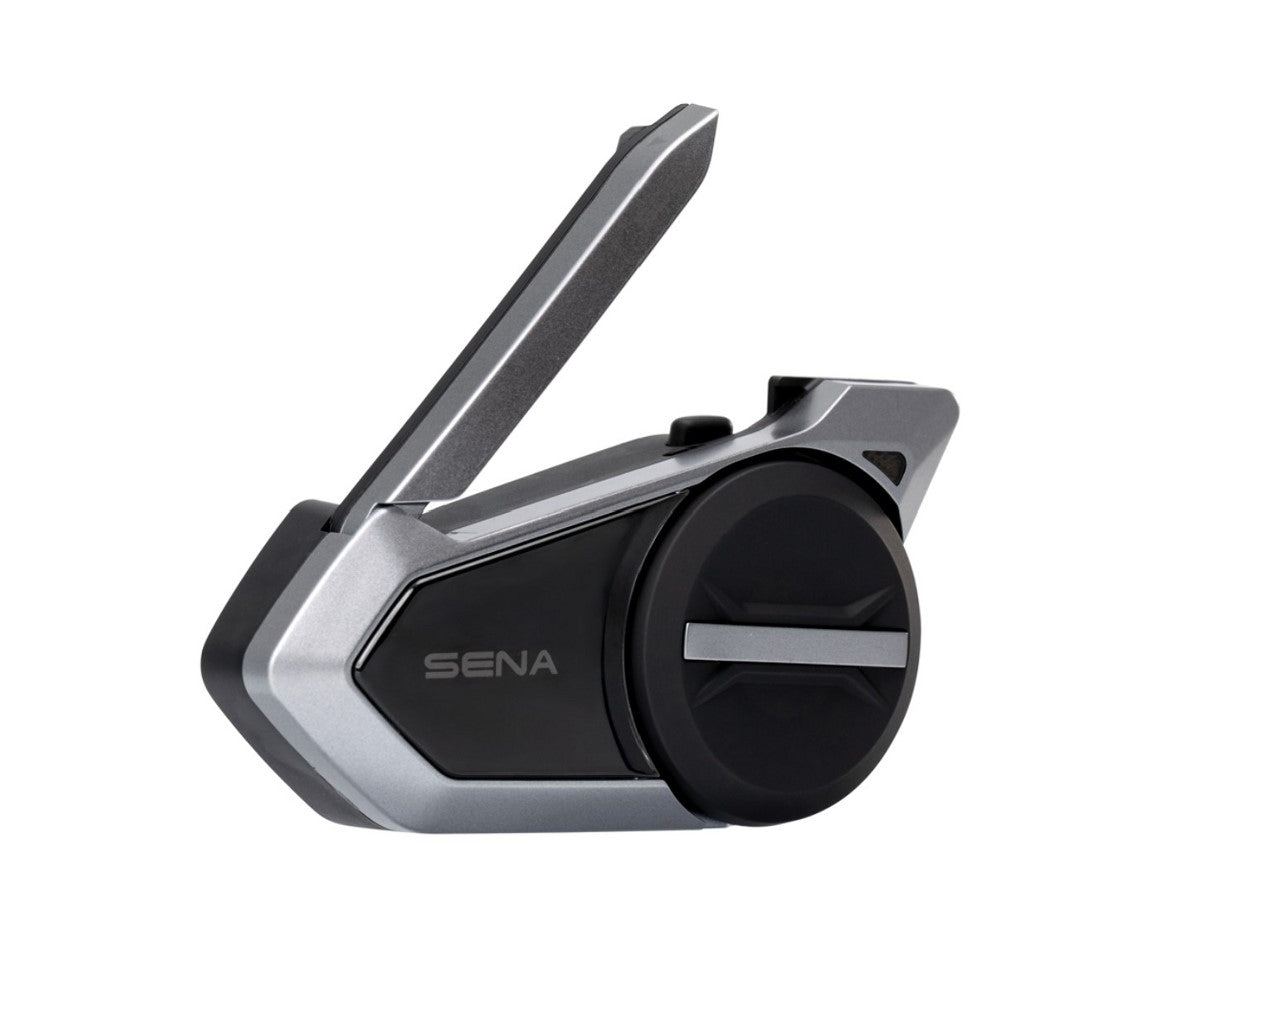 Sena 50S Dual Pack Bluetooth/Mesh Helmet Communication System Harman Kardon  